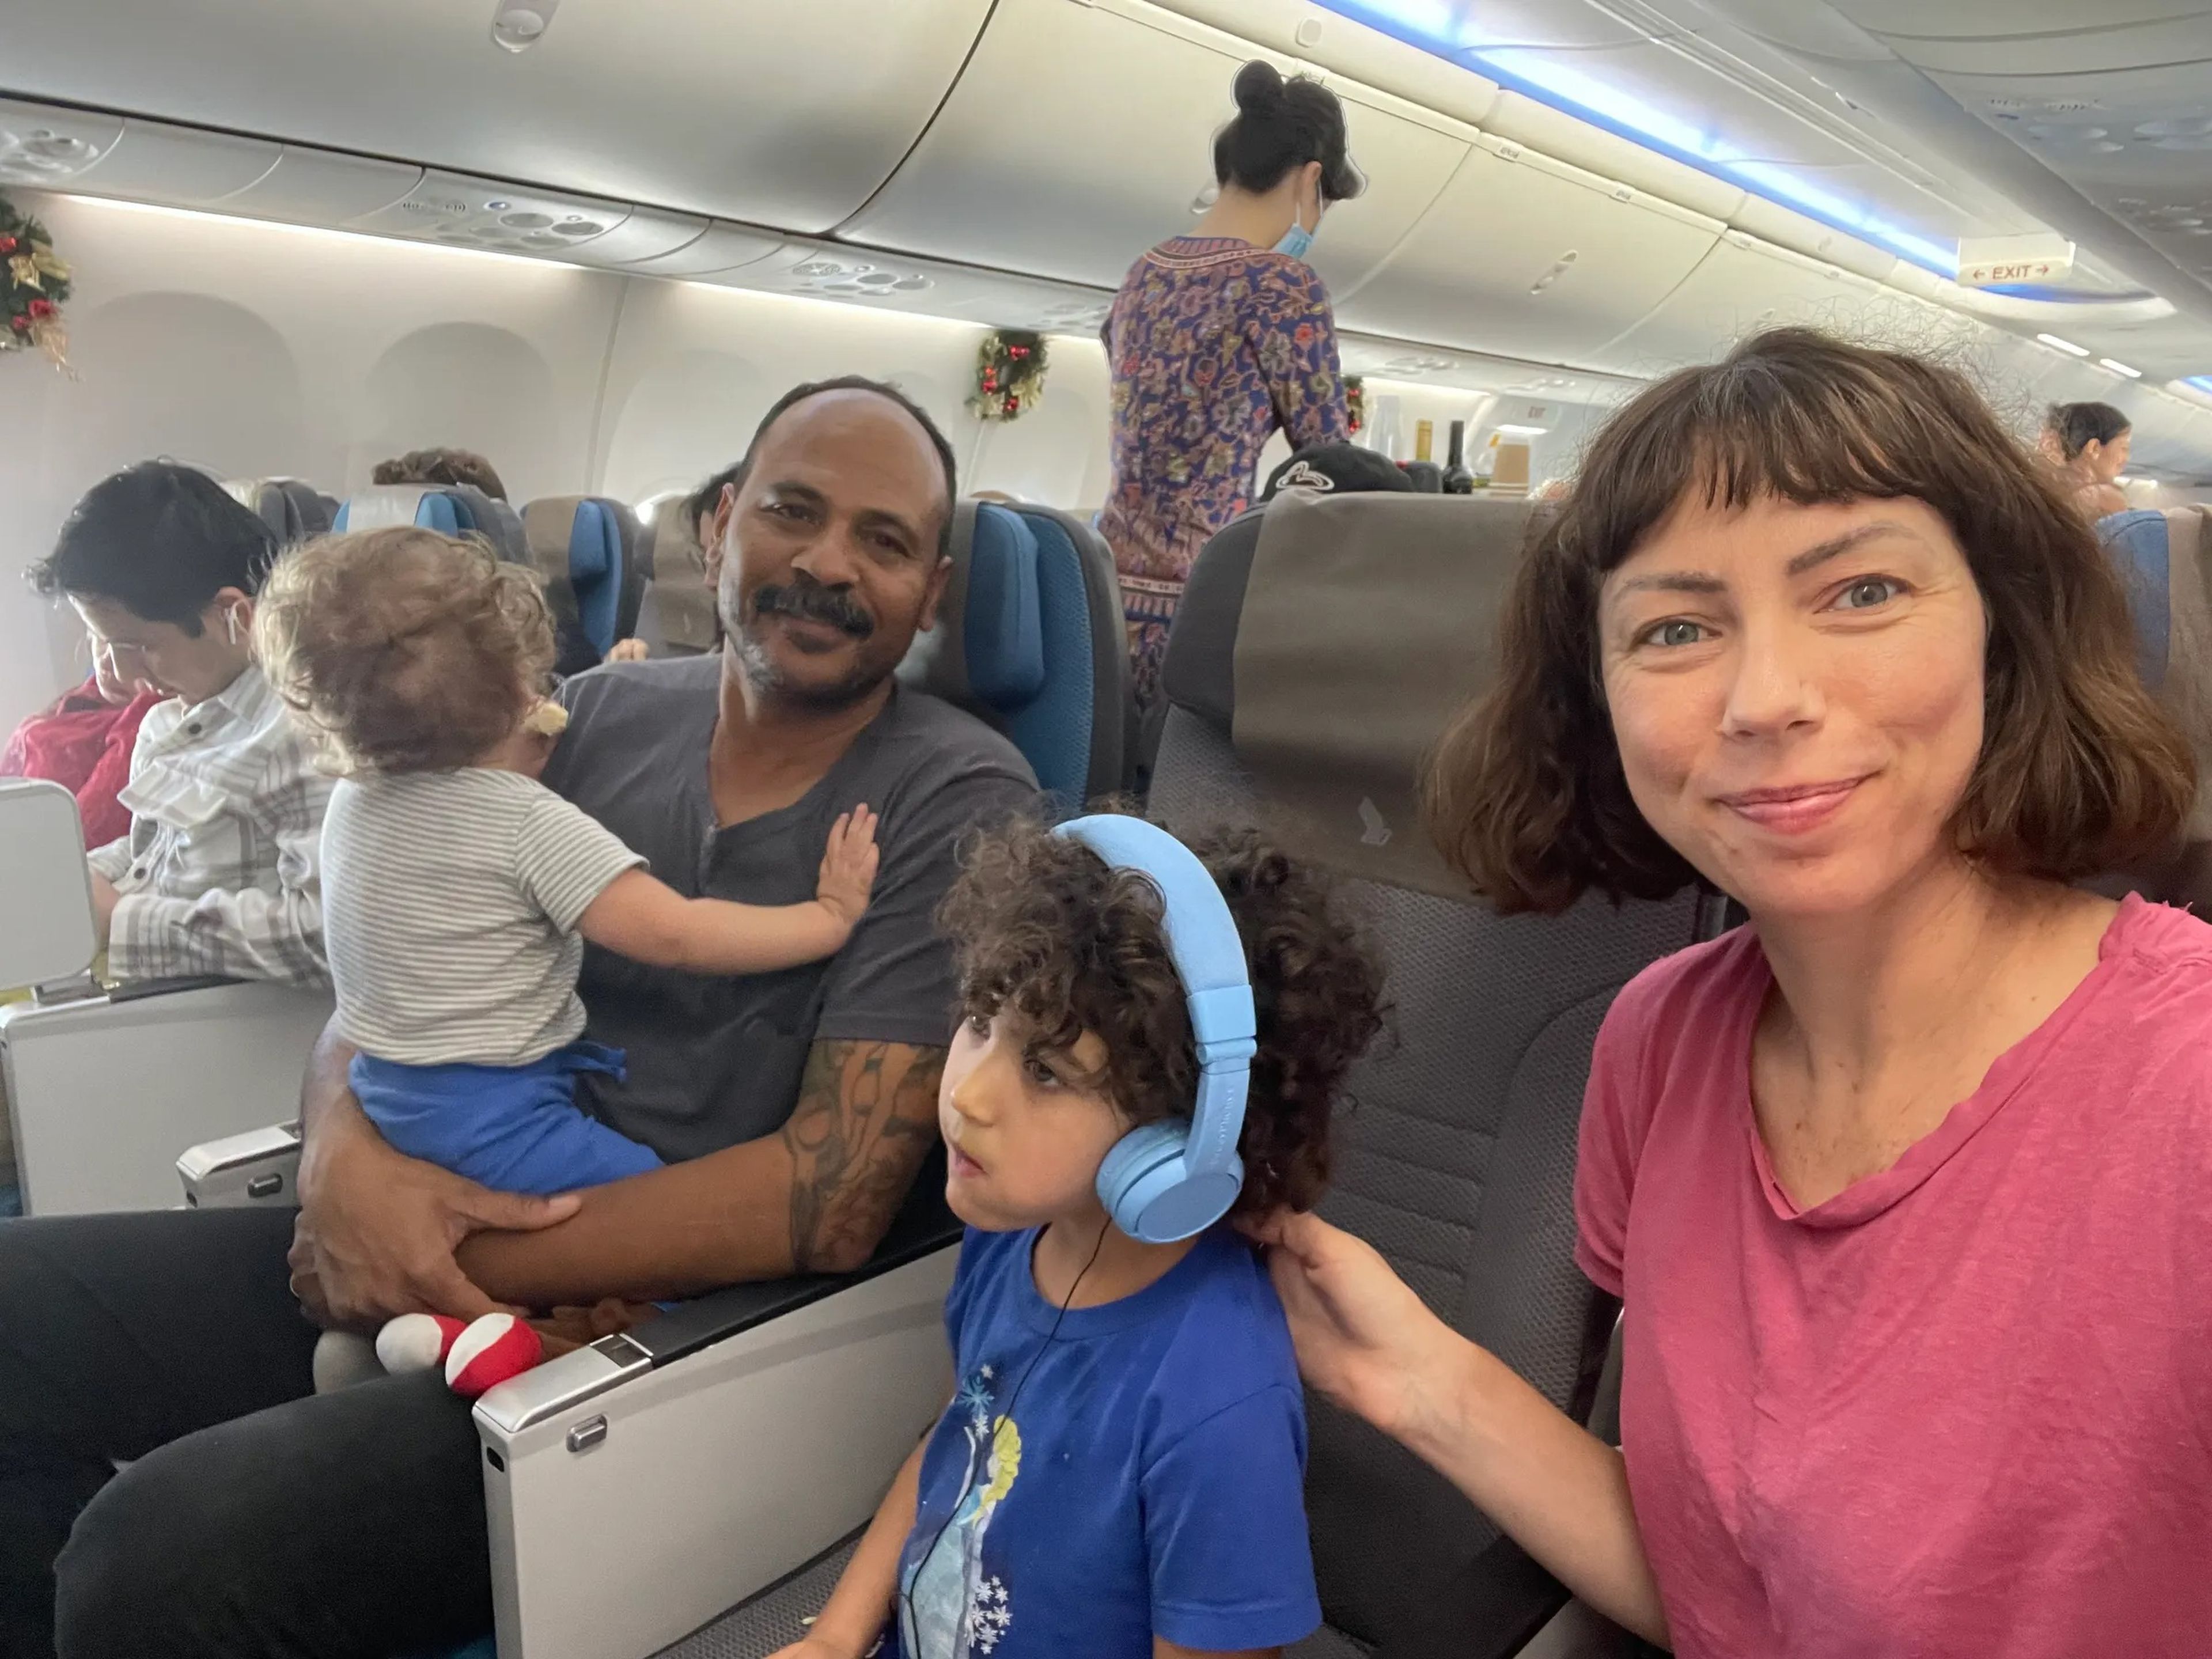 Family posing for photo on plane